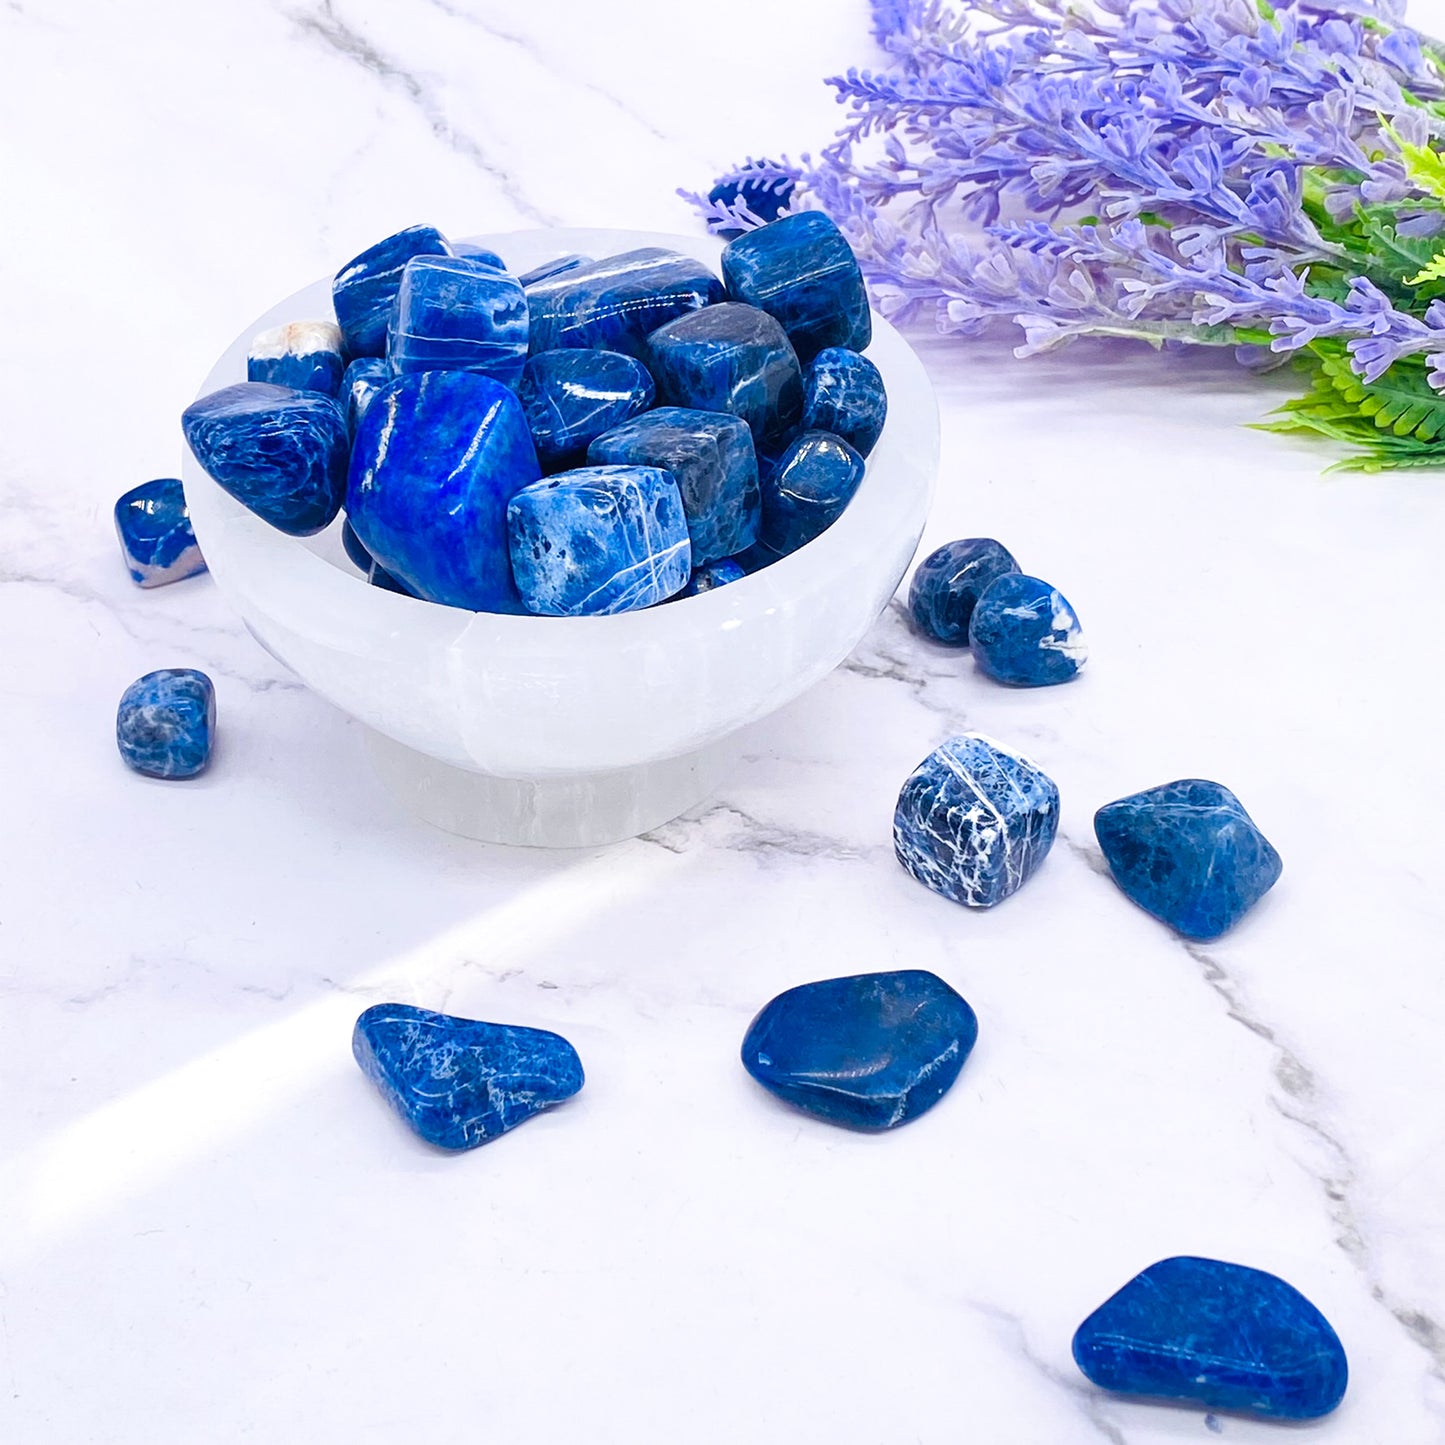 Sodalite Tumble stone, Natural Polished Crystal, Throat Chakra, Healing Crystal, 8gm to 10 gm Sodalite Gemstone, Stone for Clarity